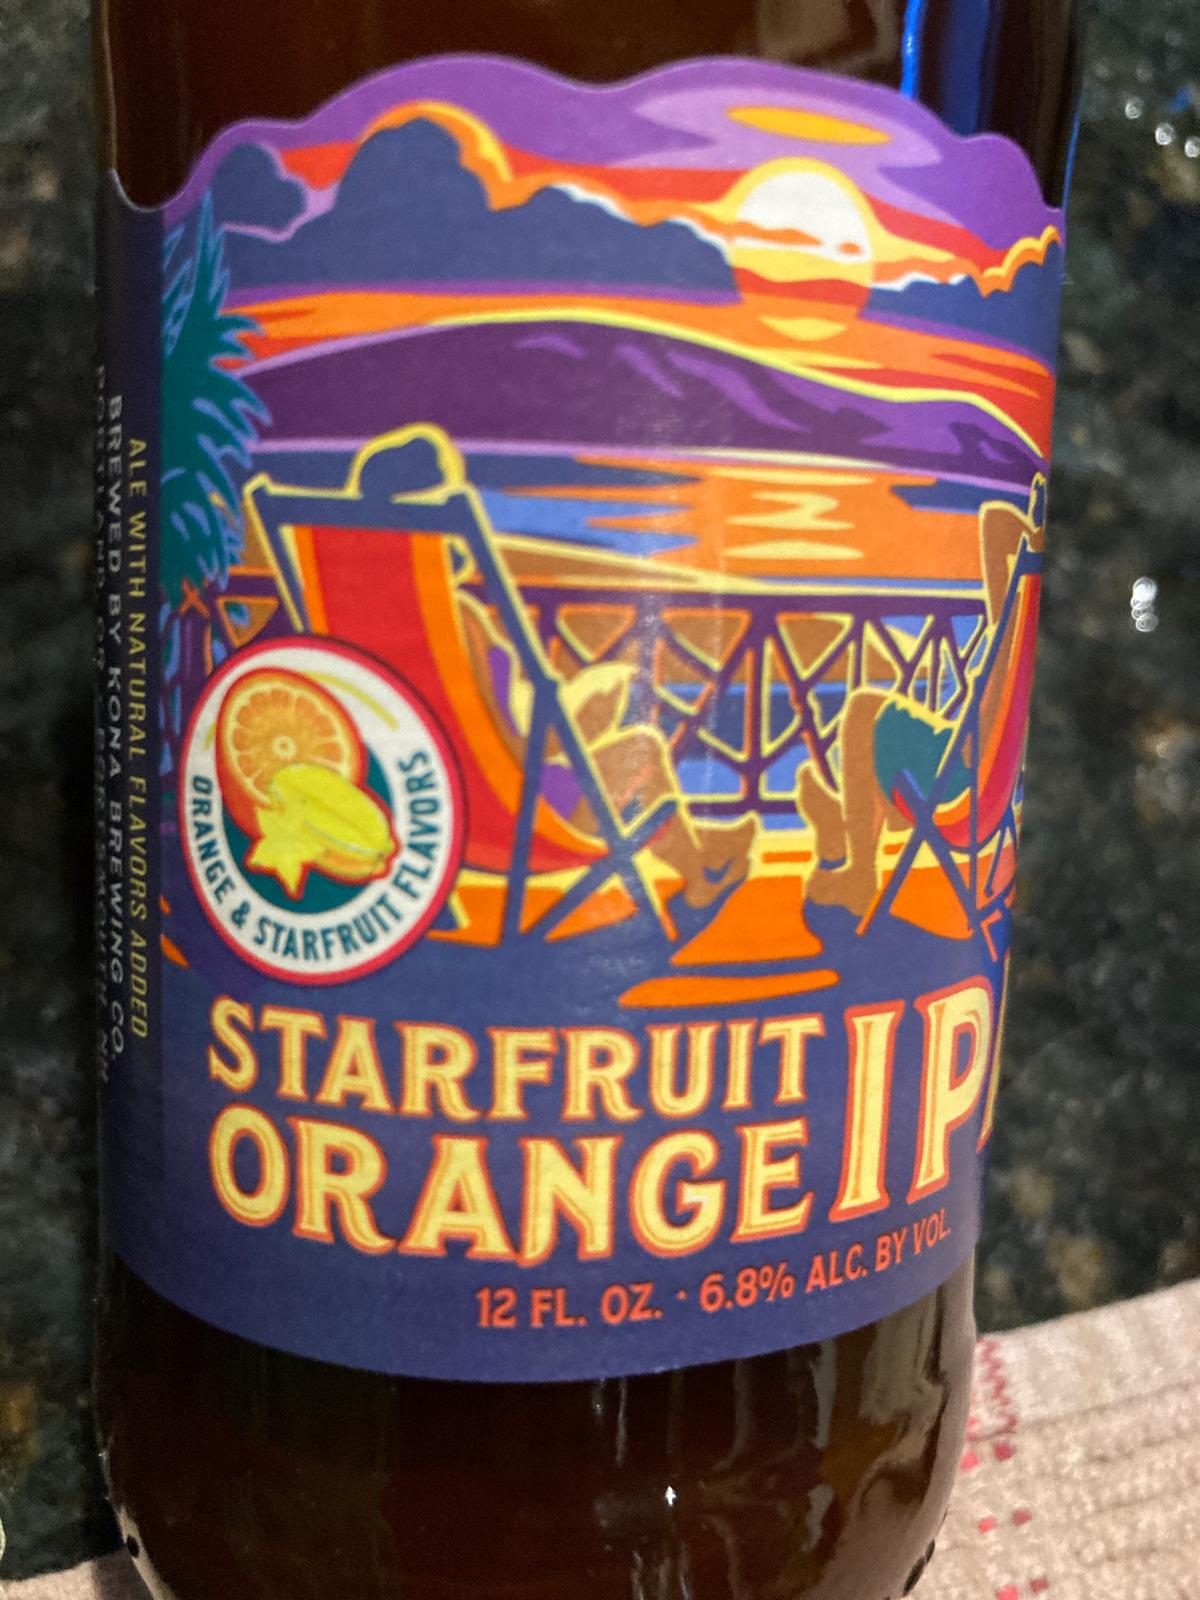 Starfruit Orange IPA